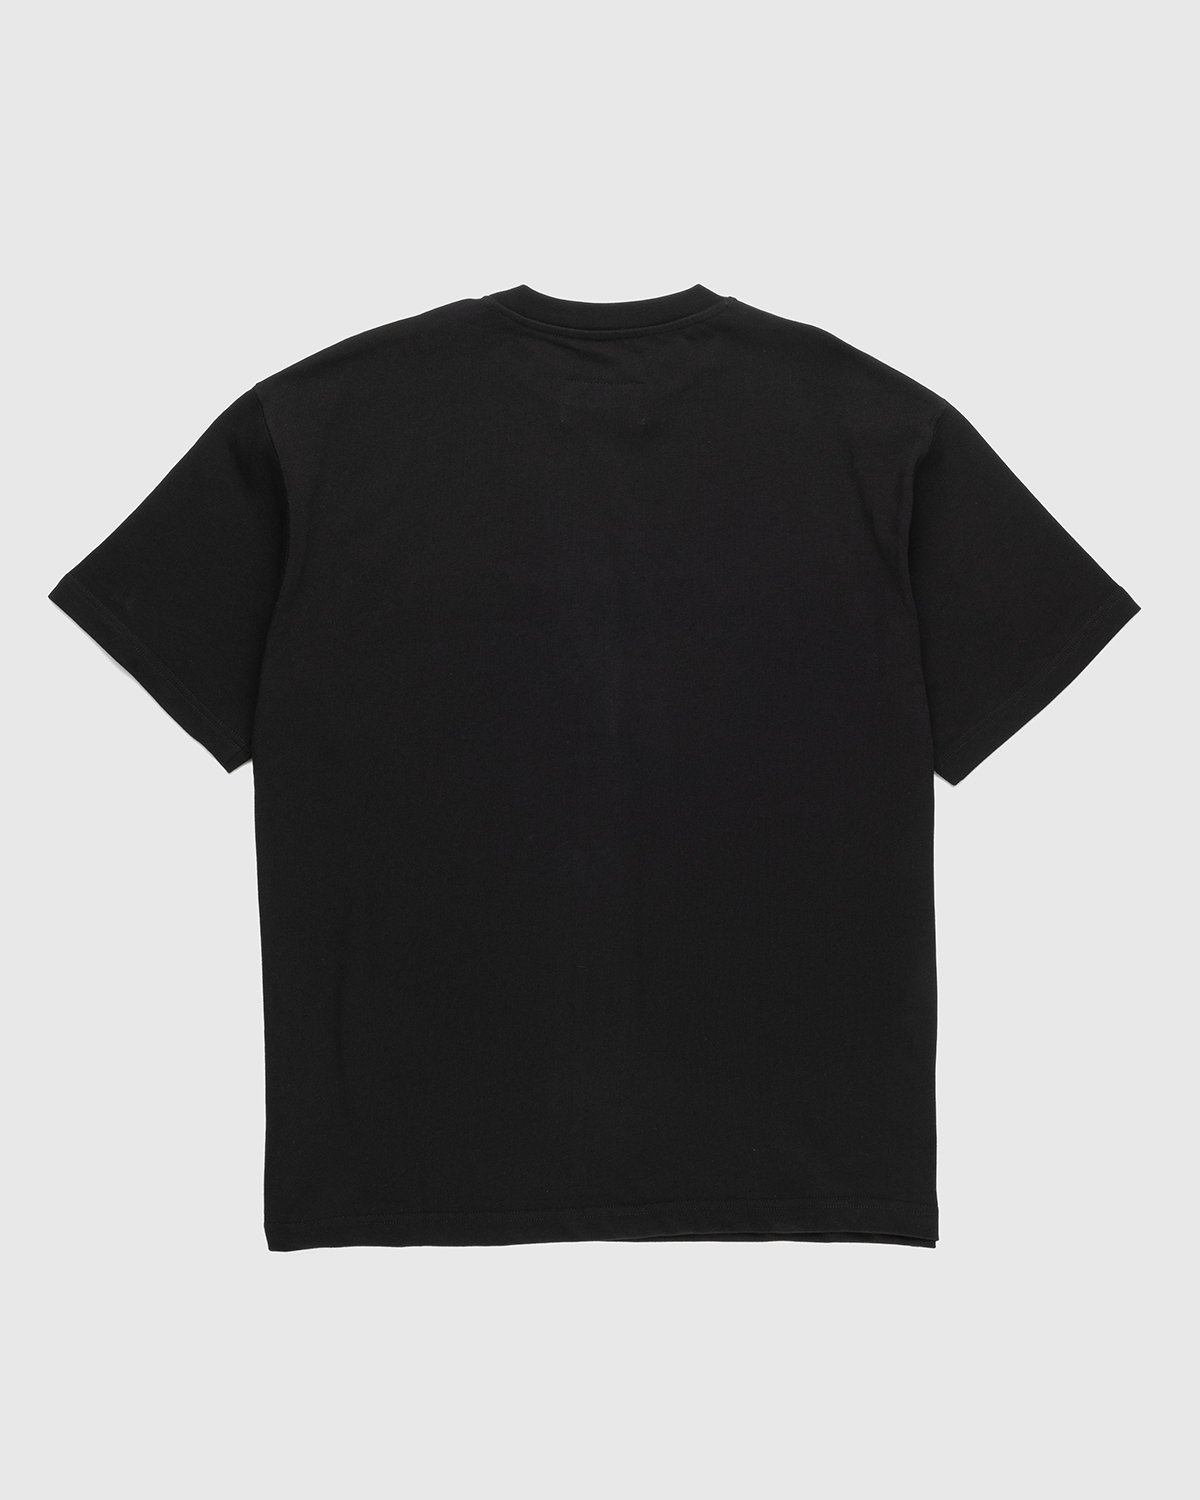 A-Cold-Wall* - Logo T-Shirt Black - Clothing - Black - Image 2